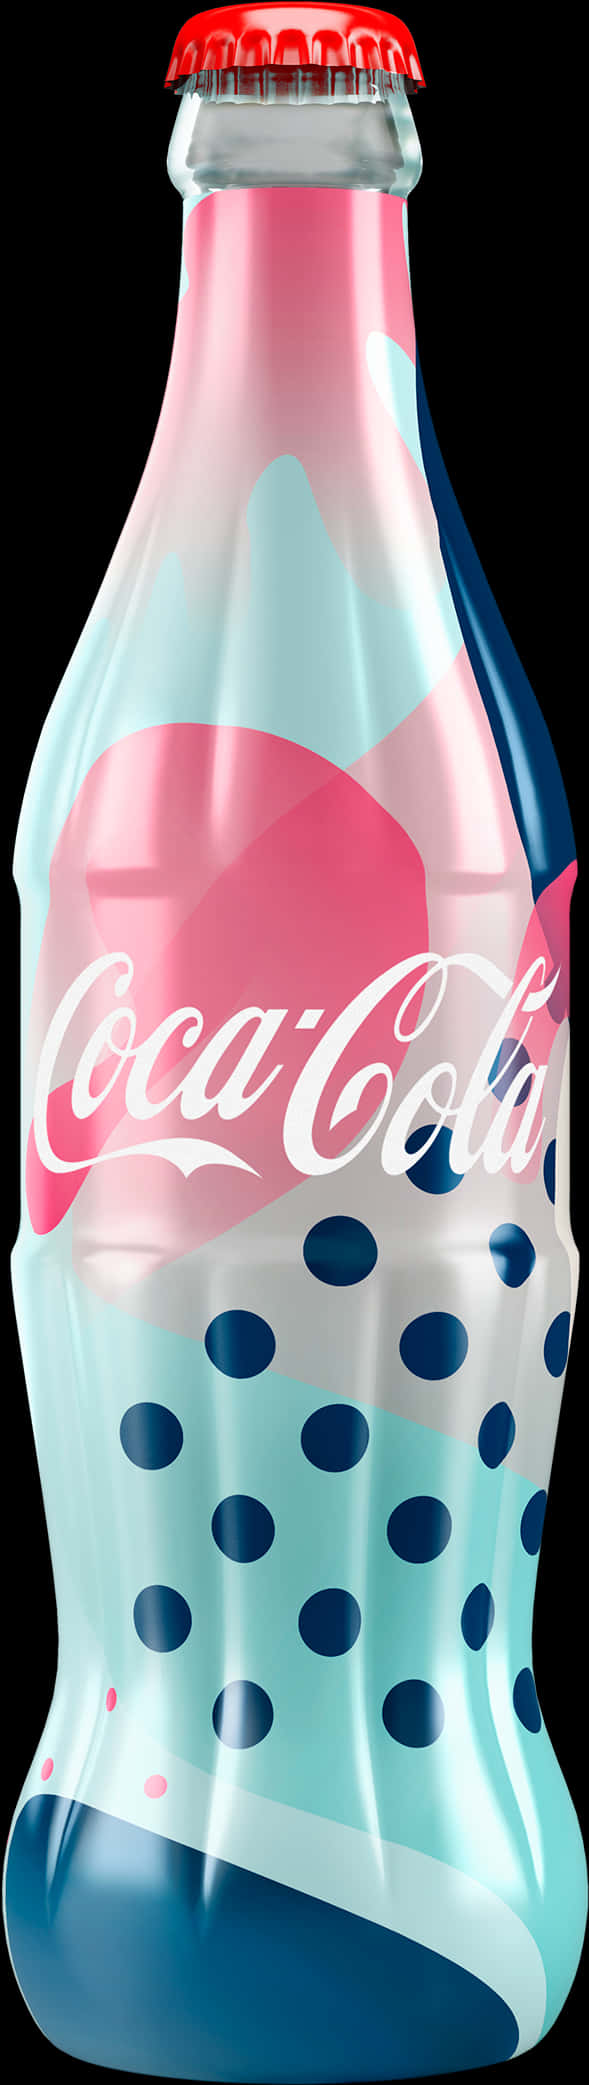 Coca Cola Abstract Bottle Design